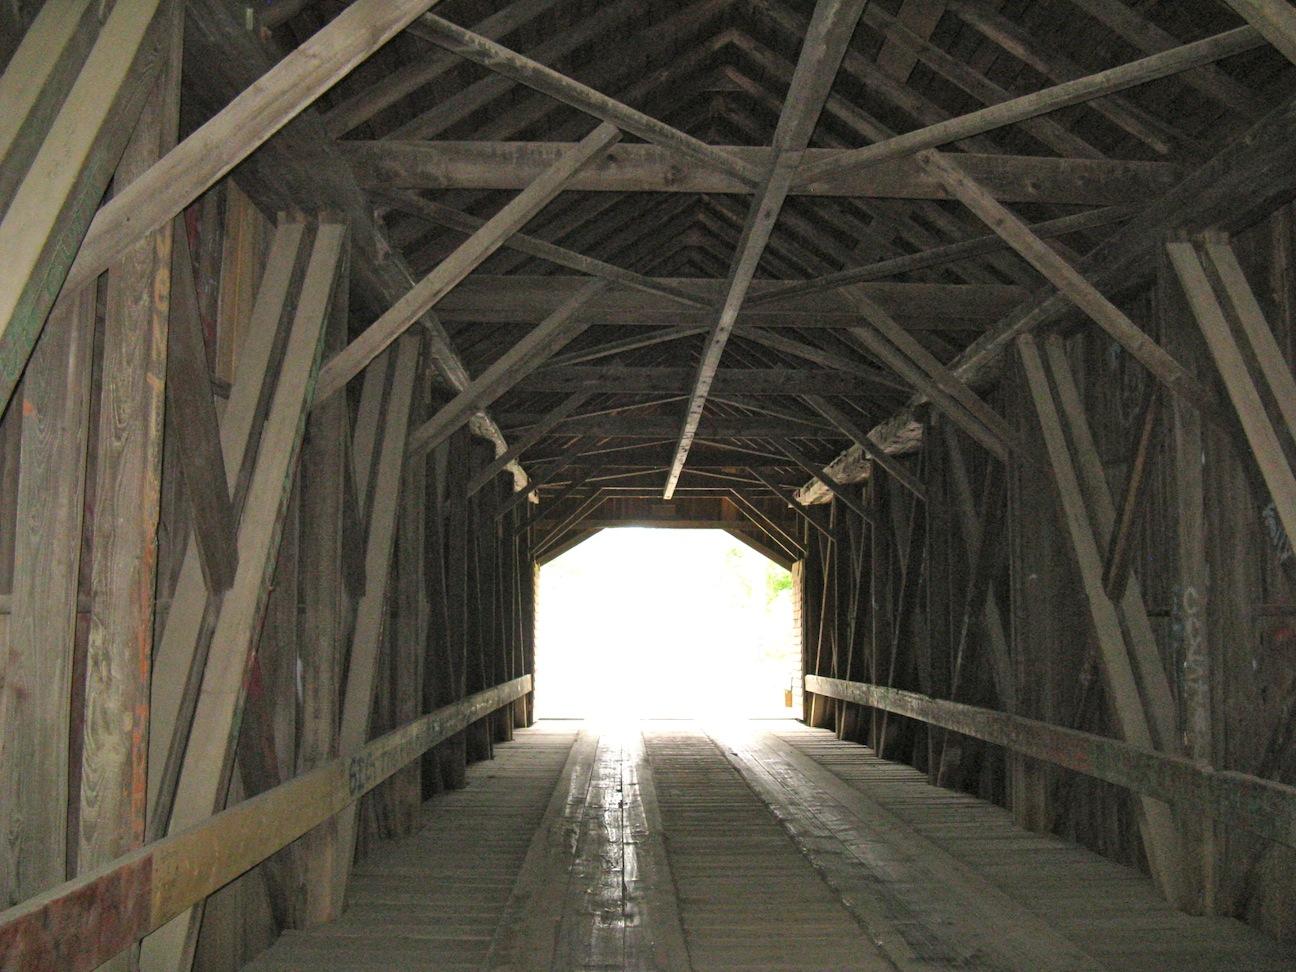 The interior side of the bridge